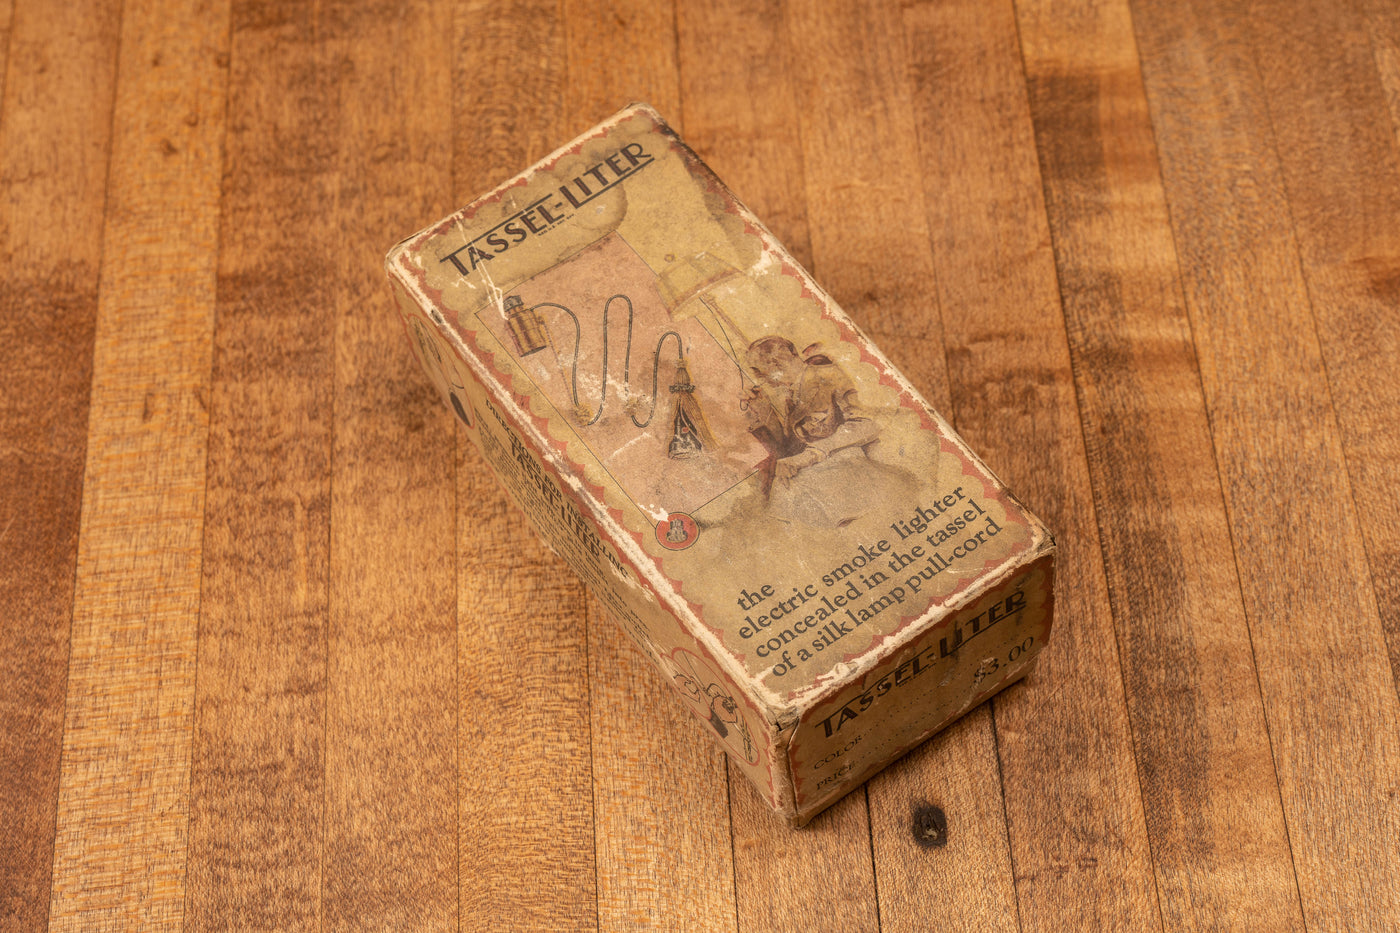 Antique Tassel-Liter Functional Cigar Lighter with Original Box